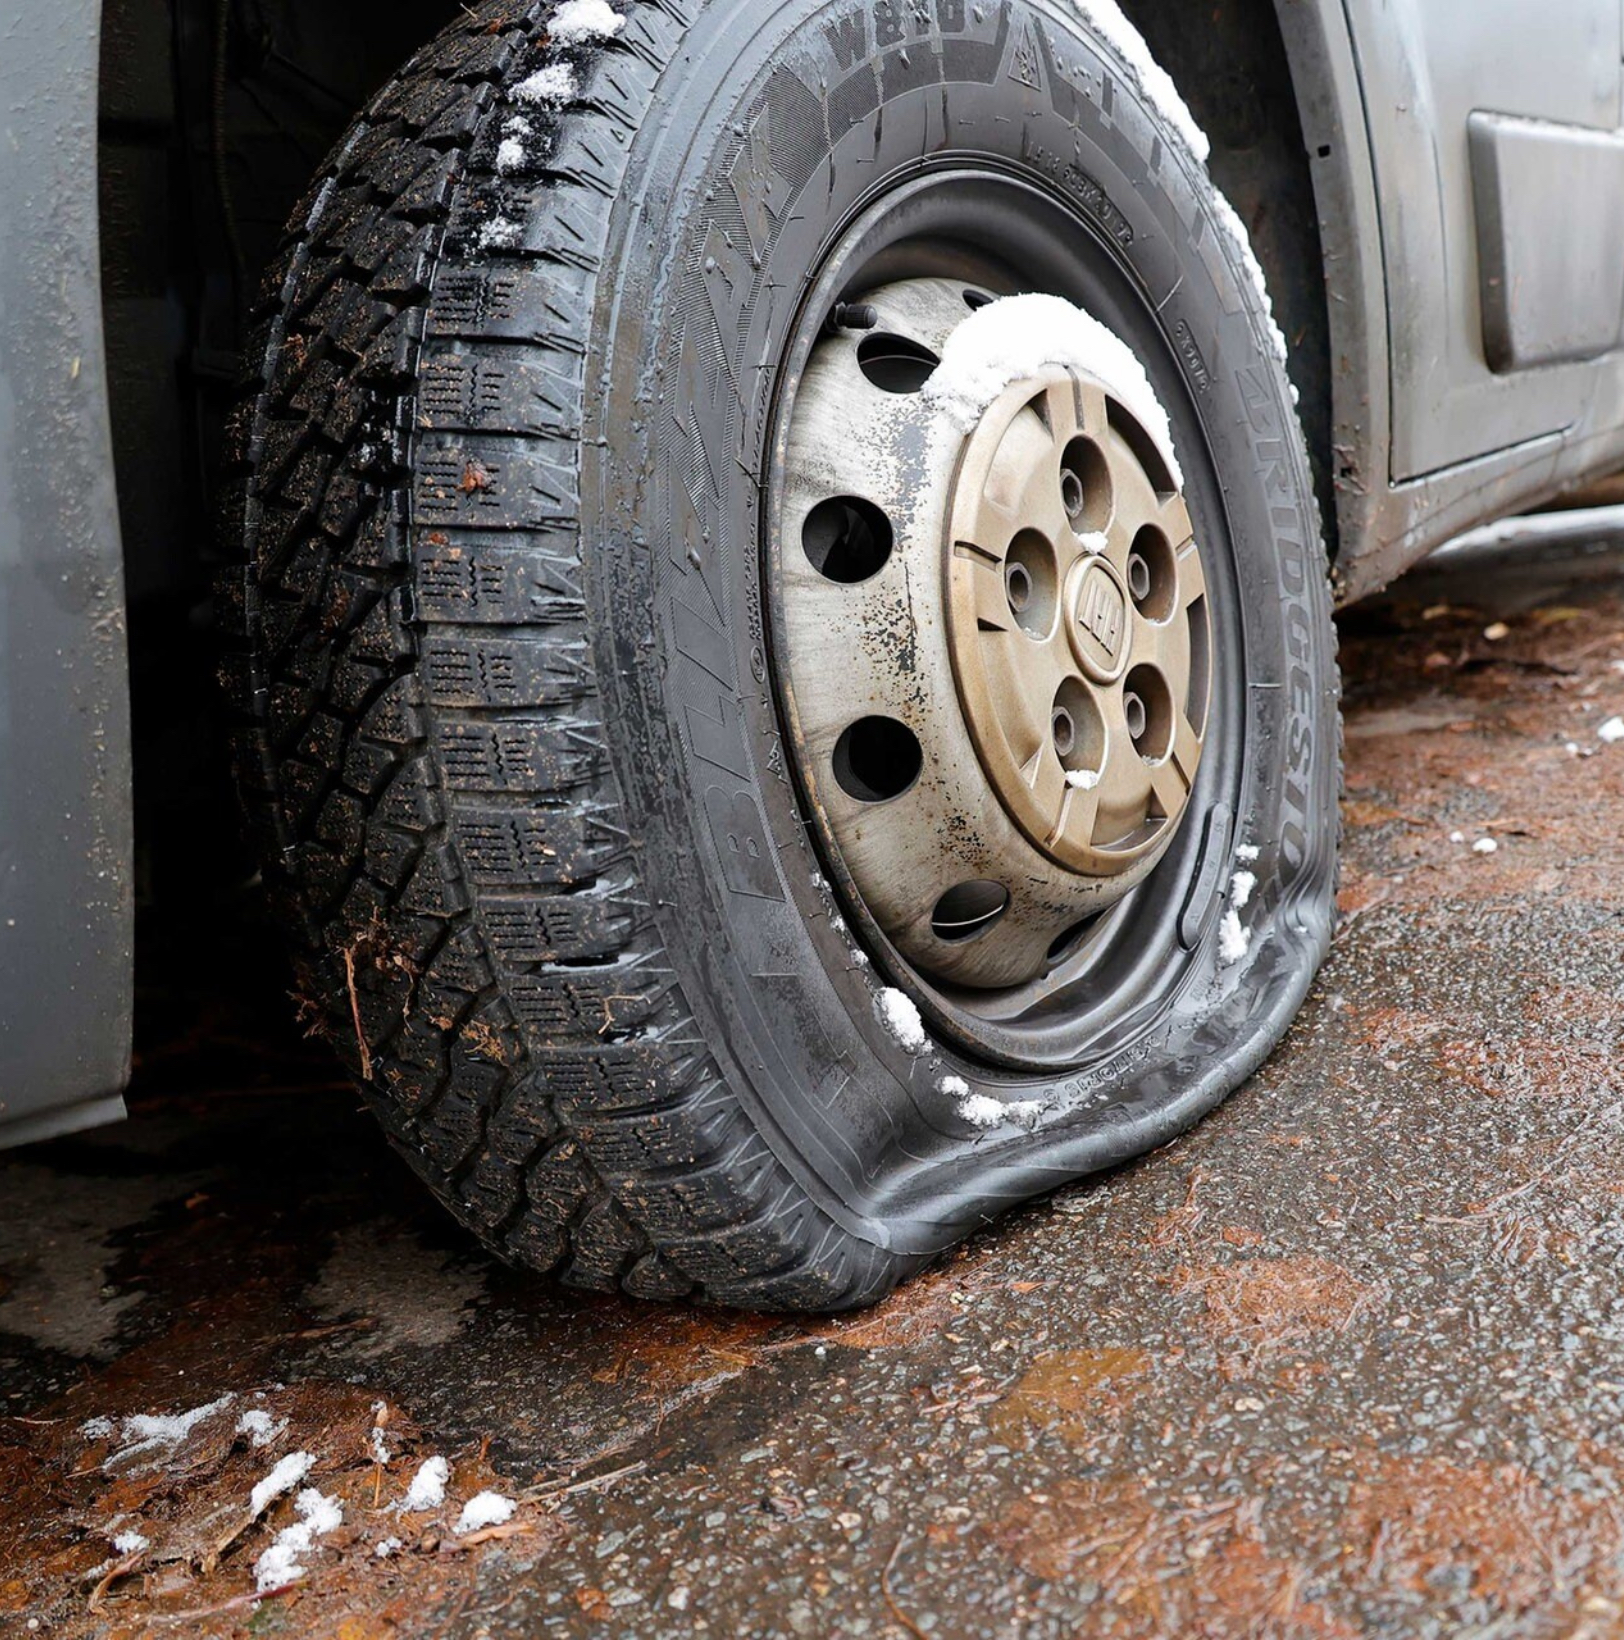 https://upload.wikimedia.org/wikipedia/commons/8/87/Deflated_car_tire.jpg